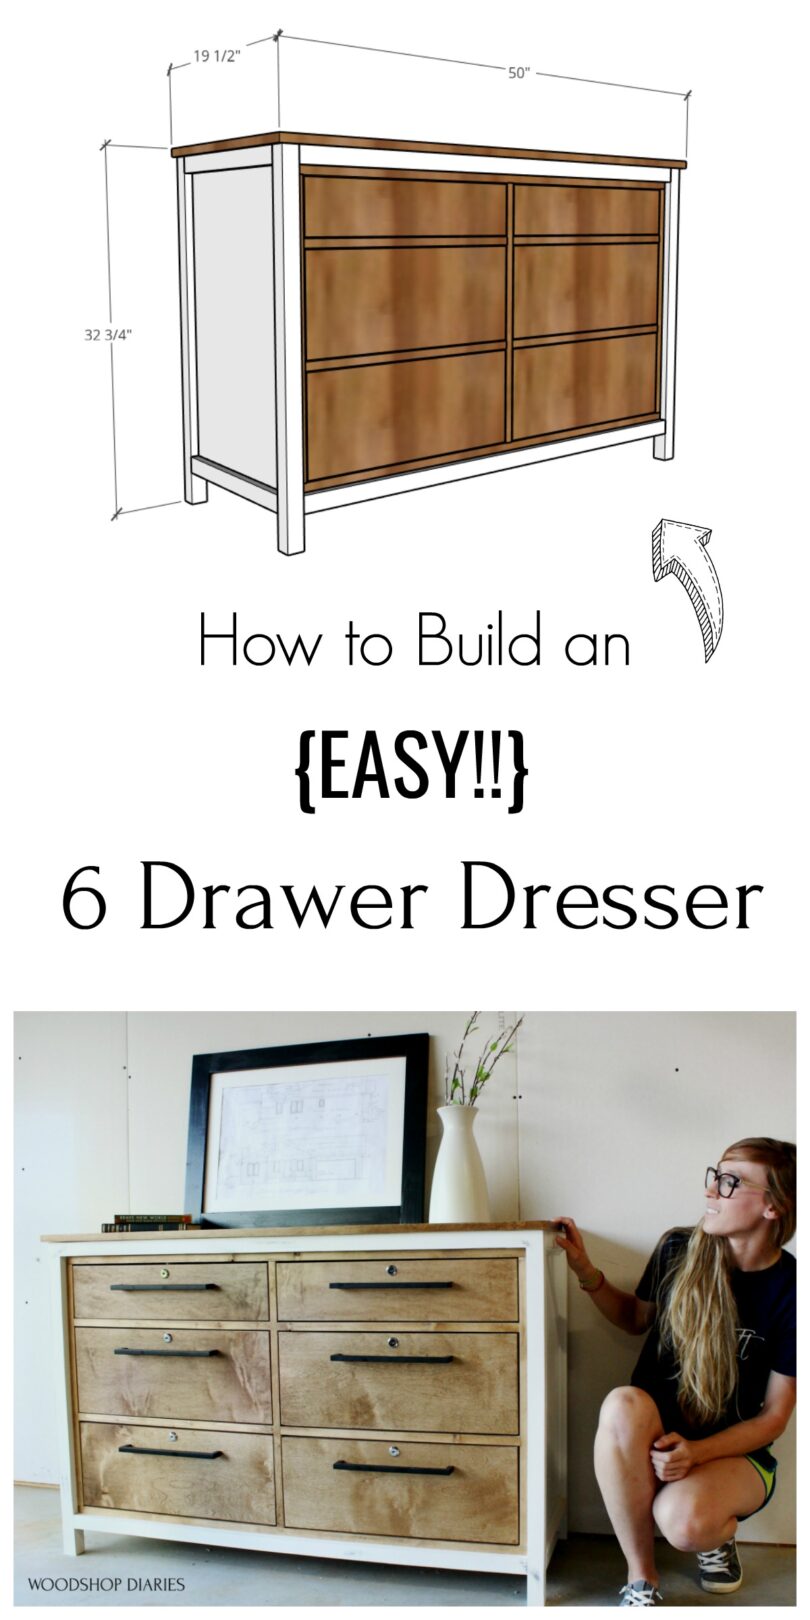 6 Drawer Dresser{9 Step Building Plans a Video Tutorial!}